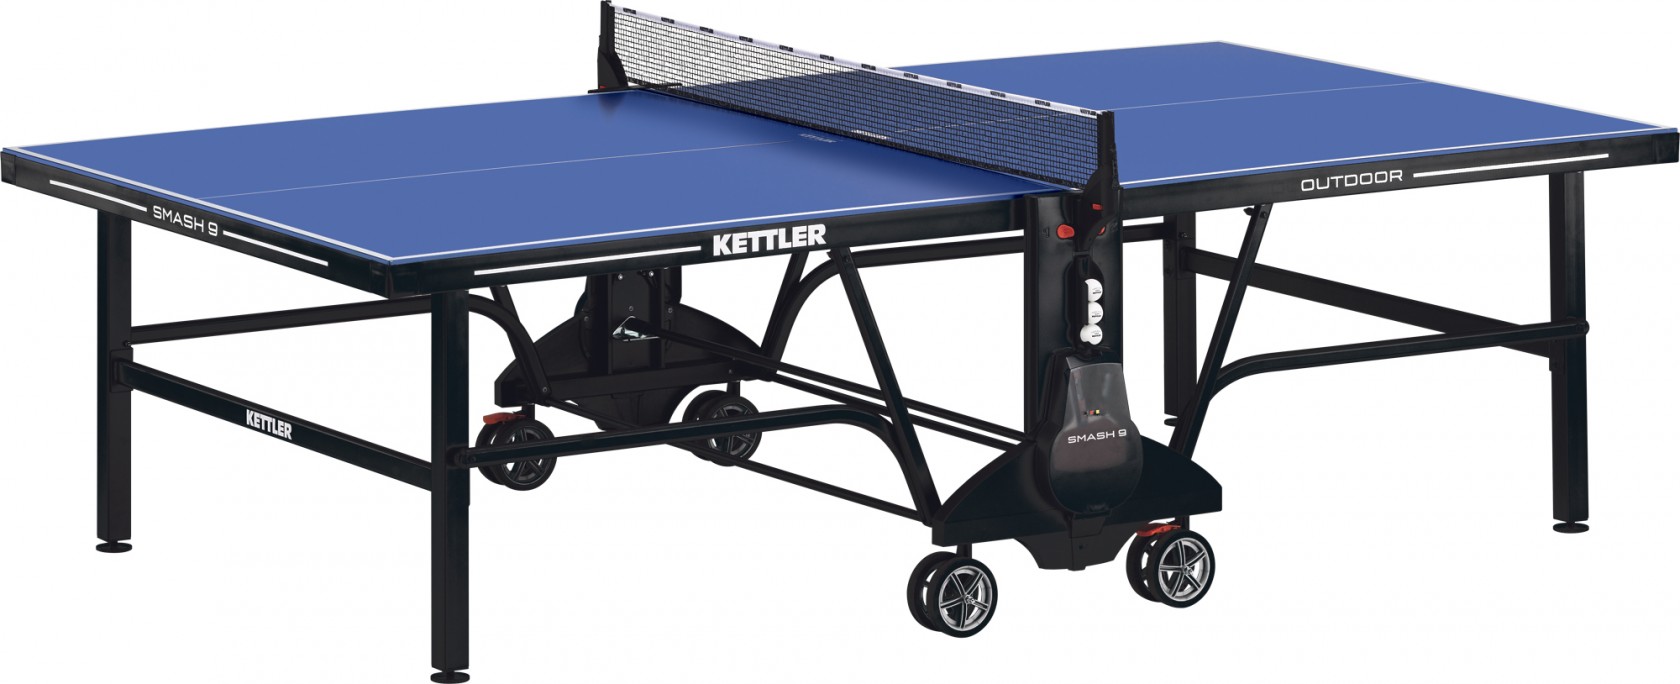 Kettler теннисный стол всепогодный outdoor